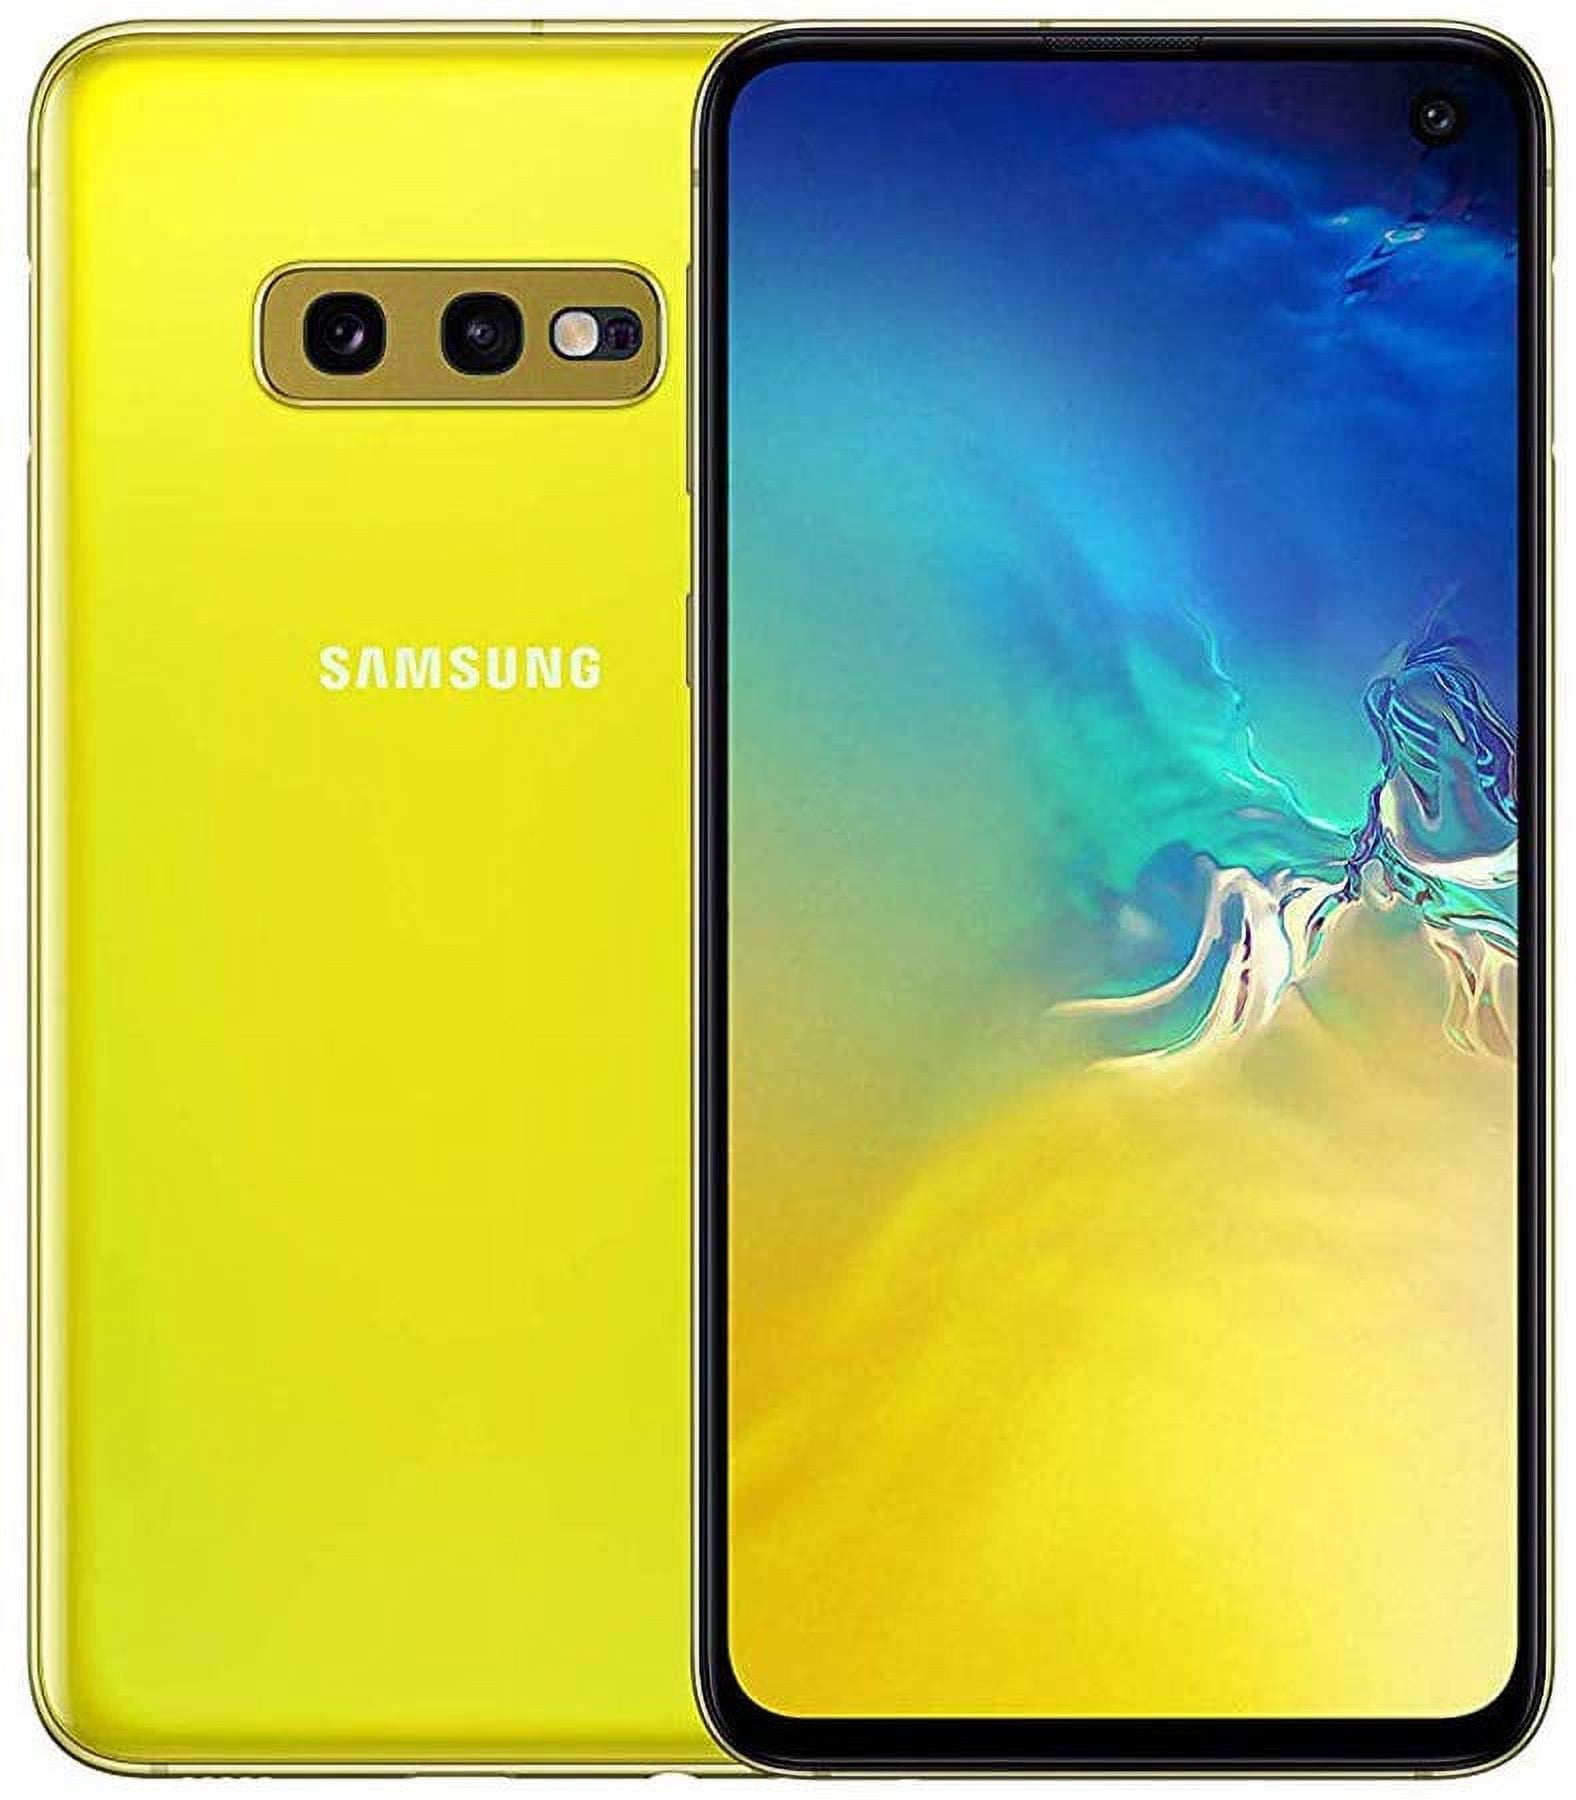 Samsung Galaxy S10e 128GB SM-G970F Hybrid/Dual-SIM (GSM Only, No CDMA)  Factory Unlocked 4G/LTE Smartphone - International Version (Canary Yellow)